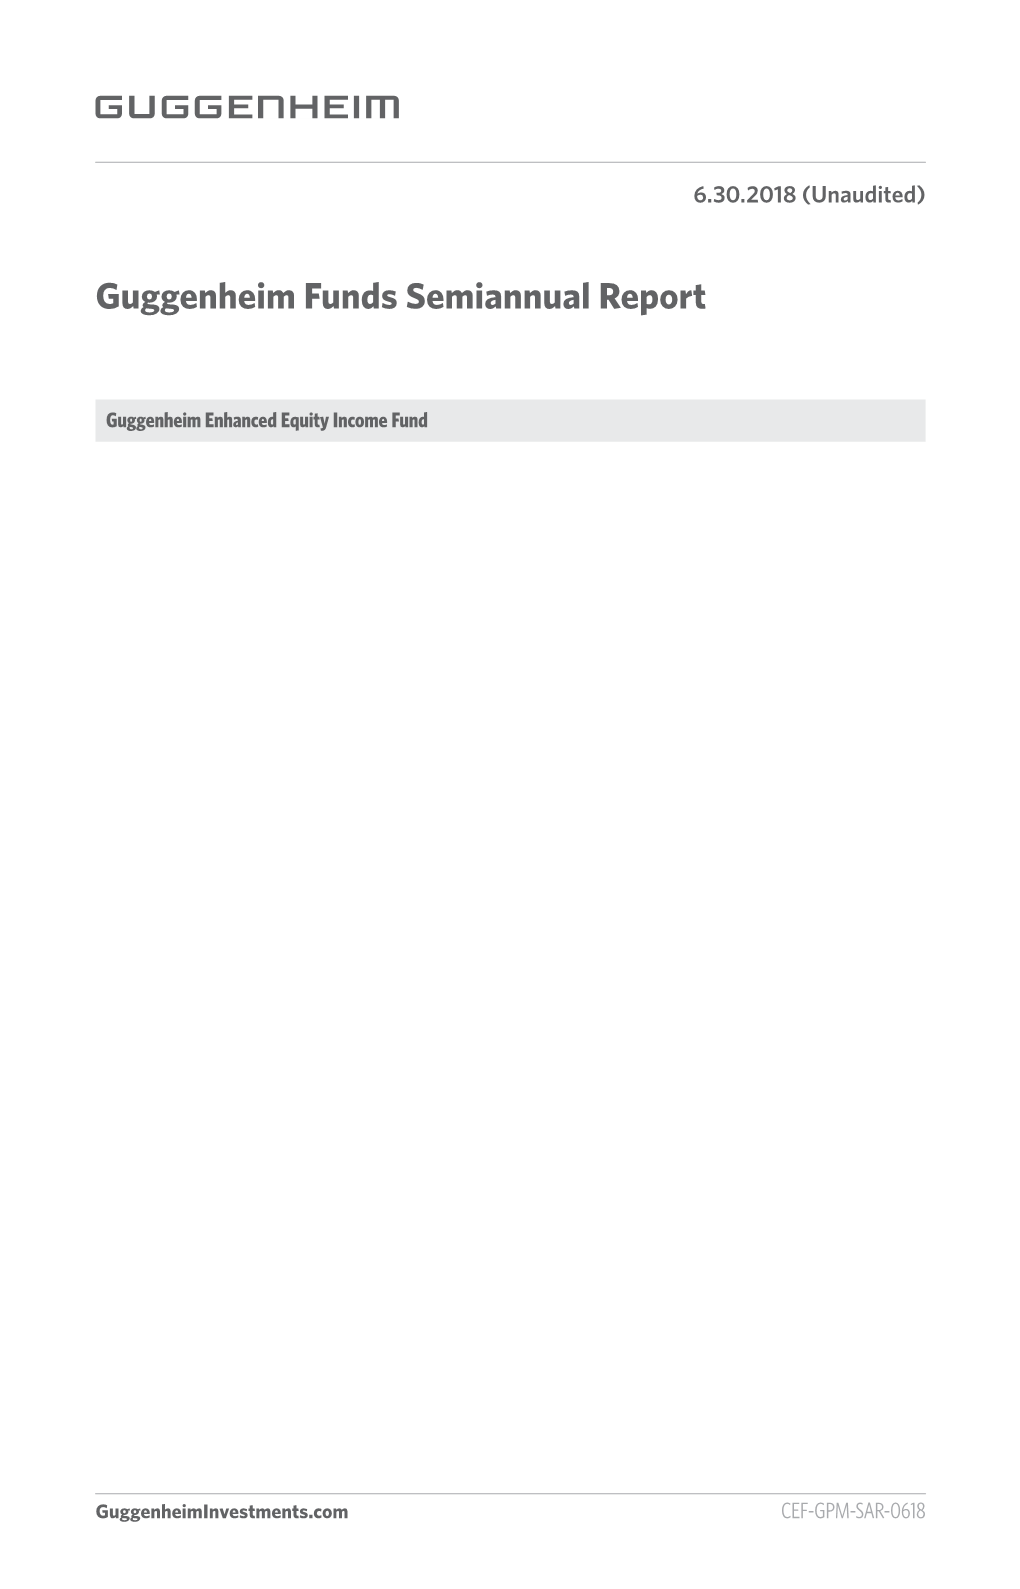 Guggenheim Funds Semiannual Report